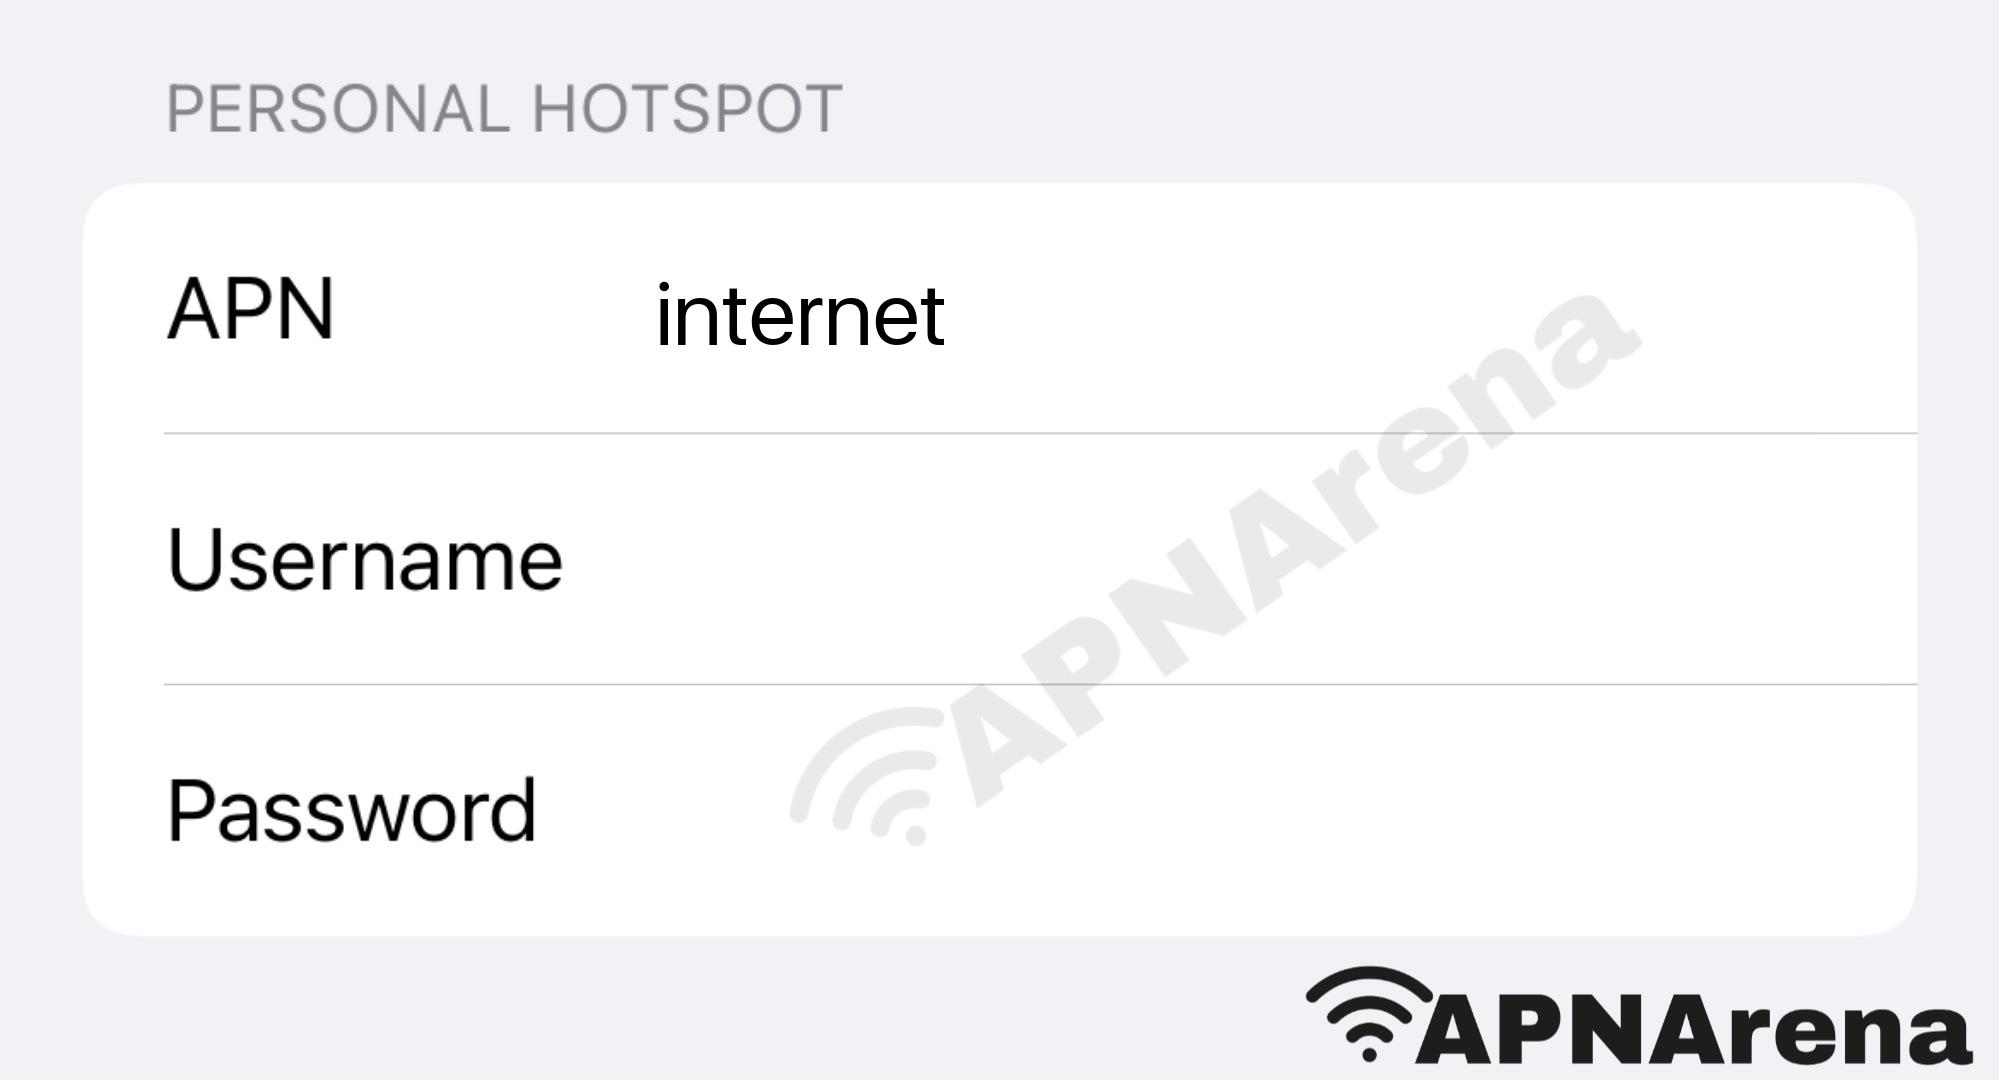 Ethio Telecom Personal Hotspot Settings for iPhone